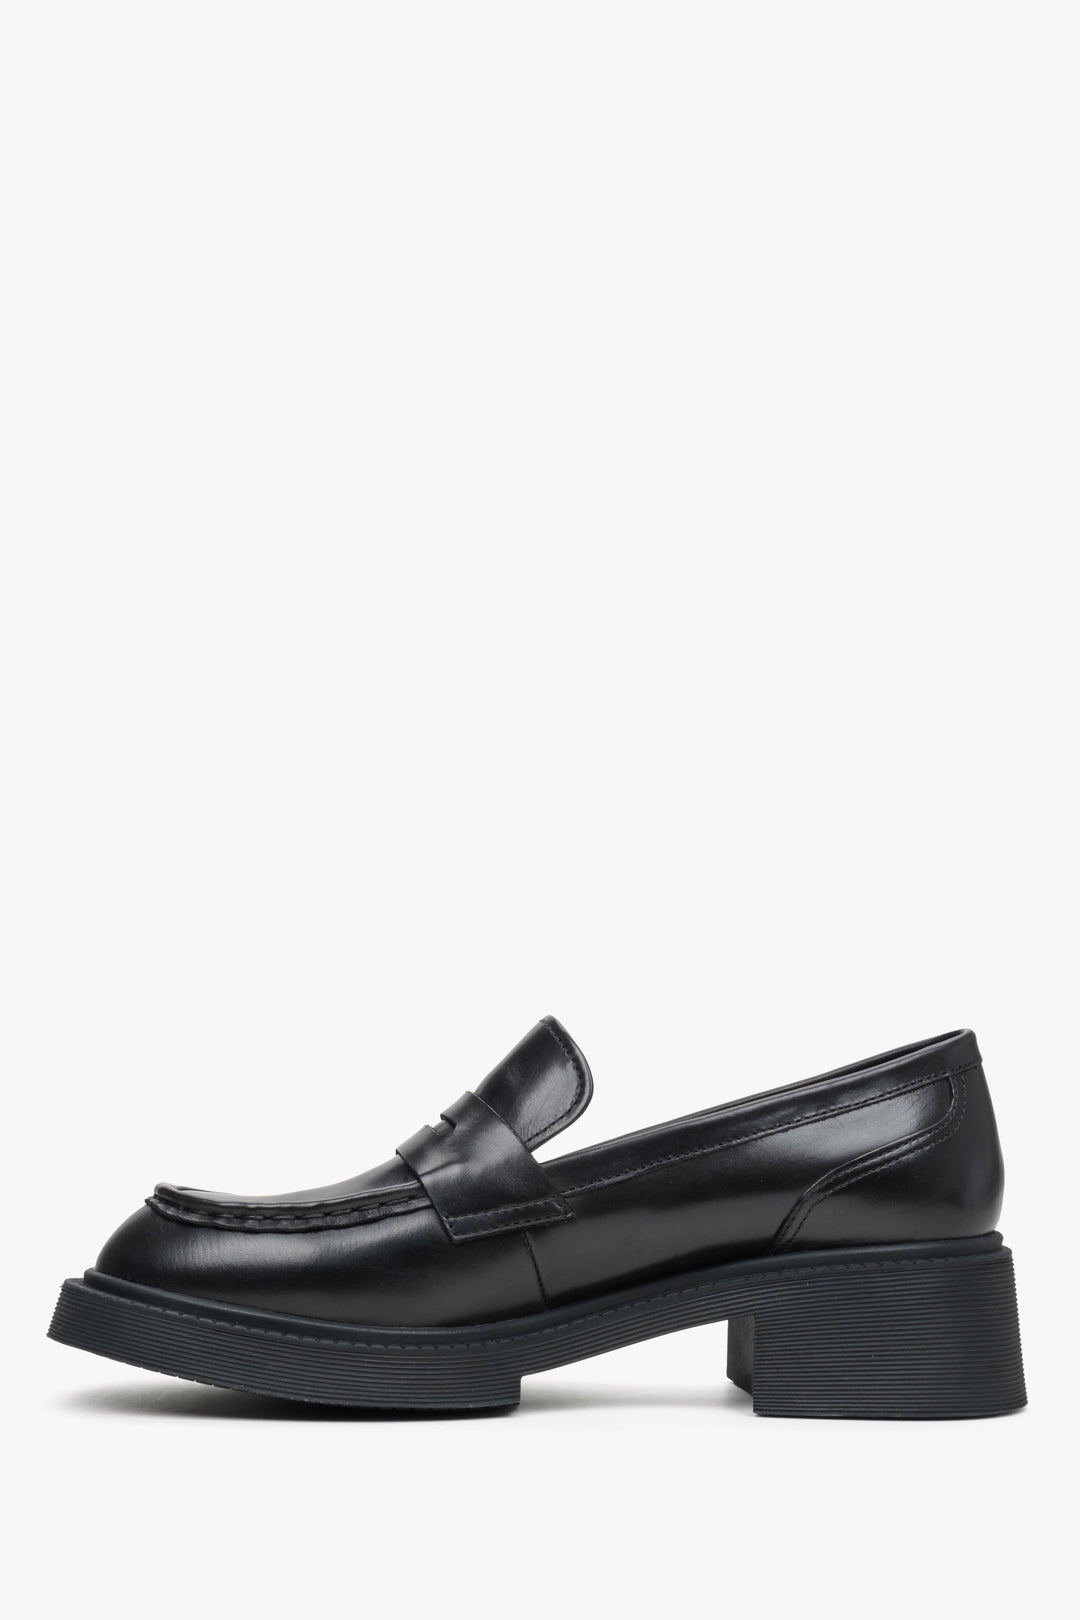 Skórzane, czarne mokasyny damskie na stabilnym obcasie - profil buta.